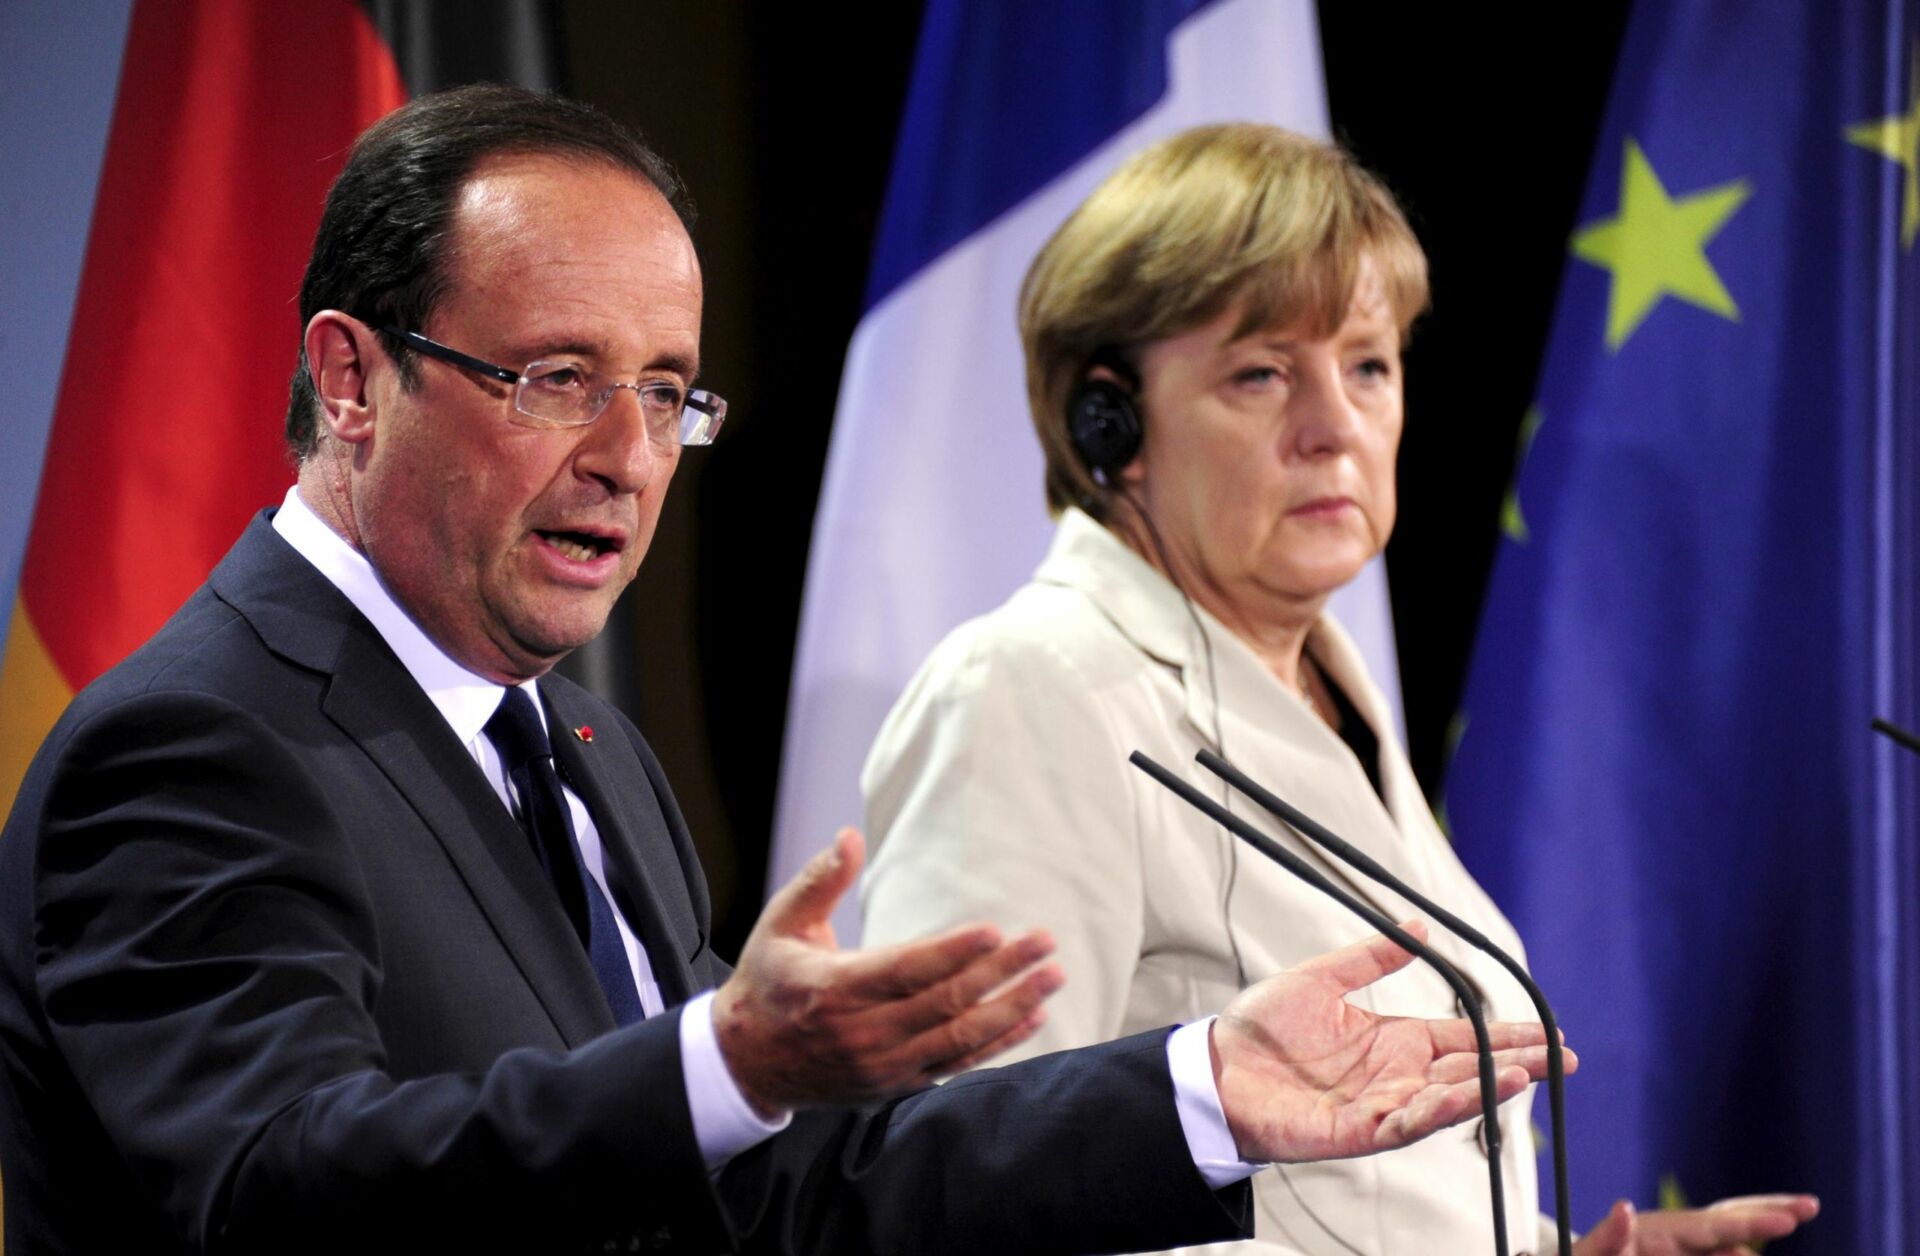 French President Hollande and German Chancellor Merkel